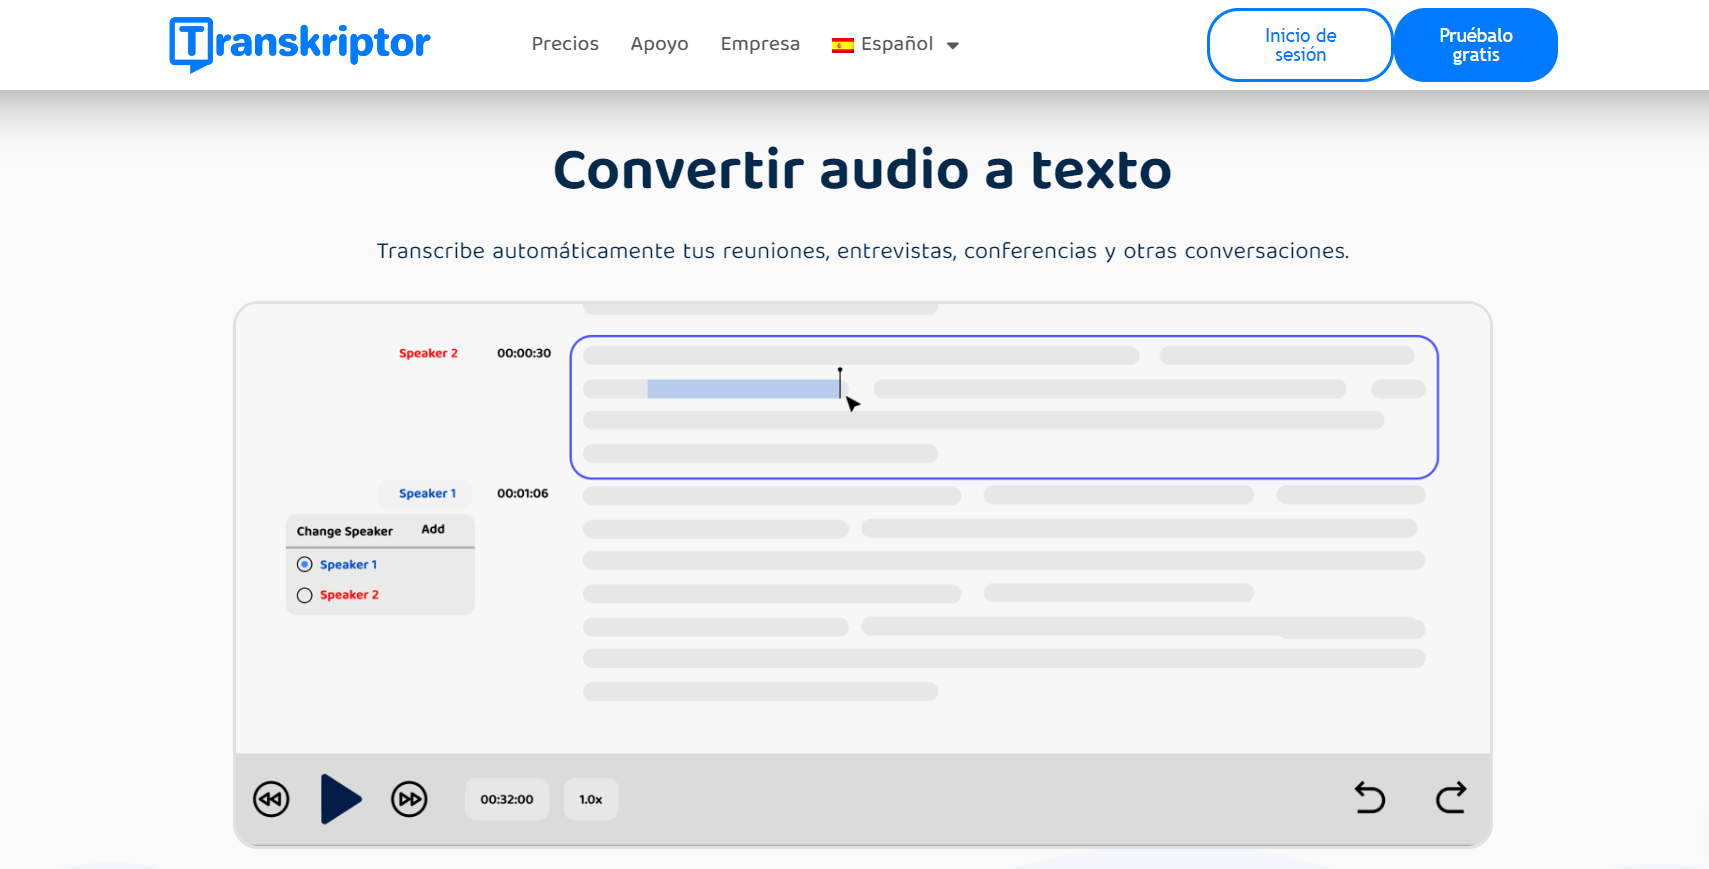 acento oficial Descubrir Webs para convertir audio a texto gratis: Transcripción en tiempo real